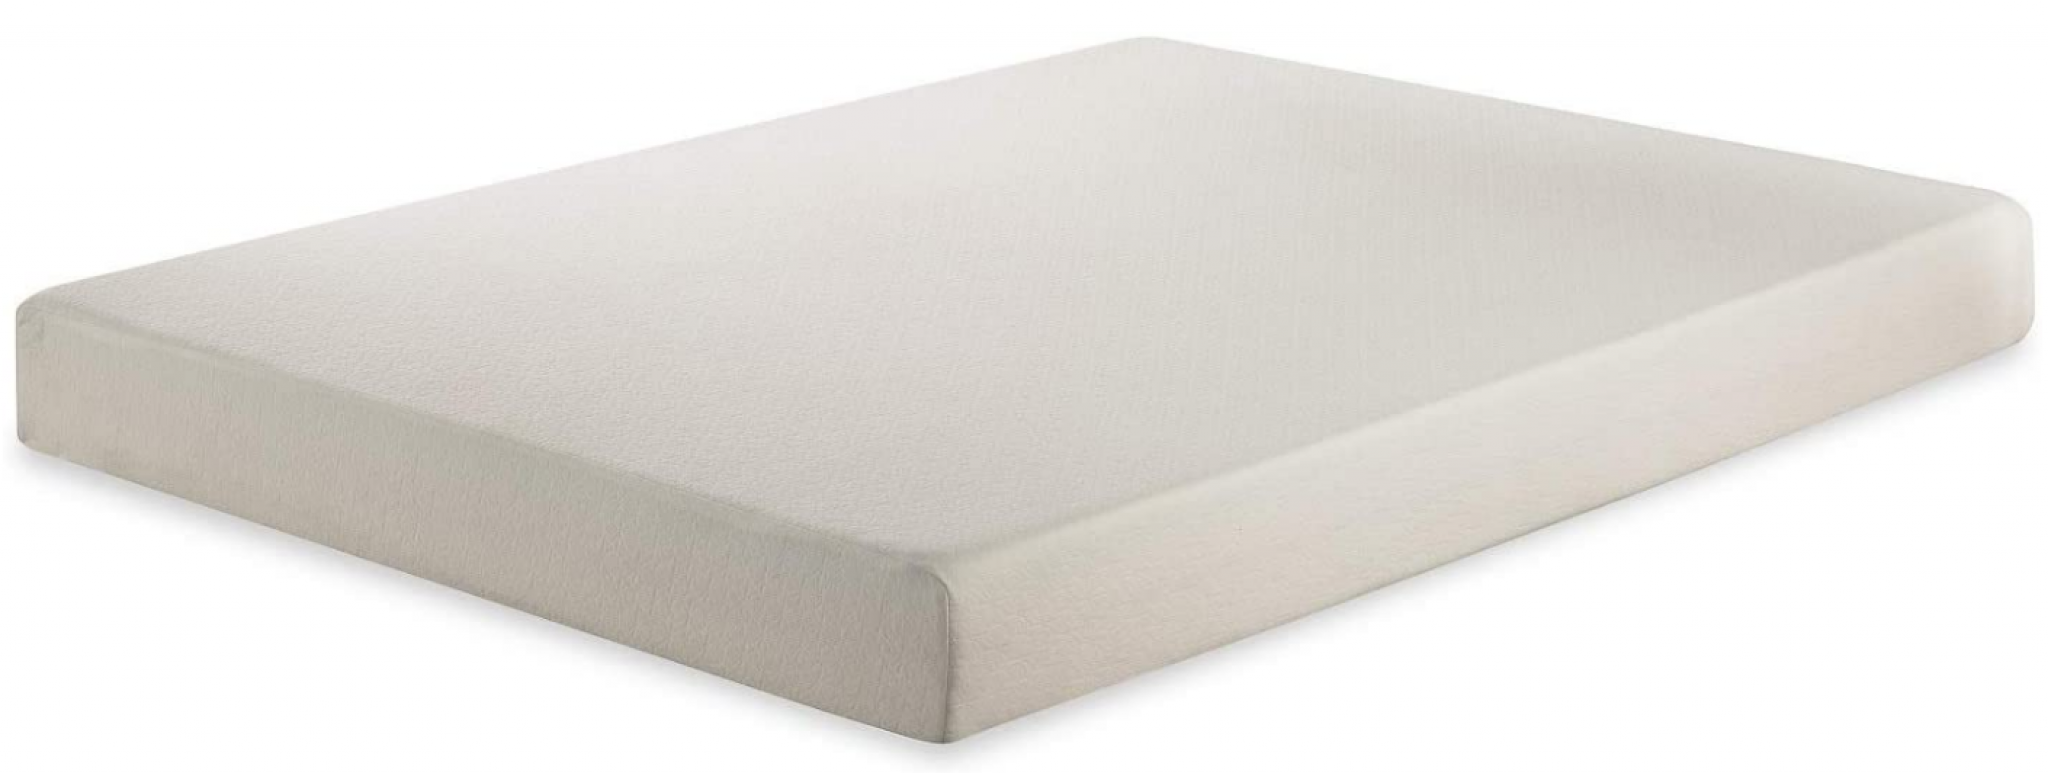 34.5 x 54 inch daybed mattress